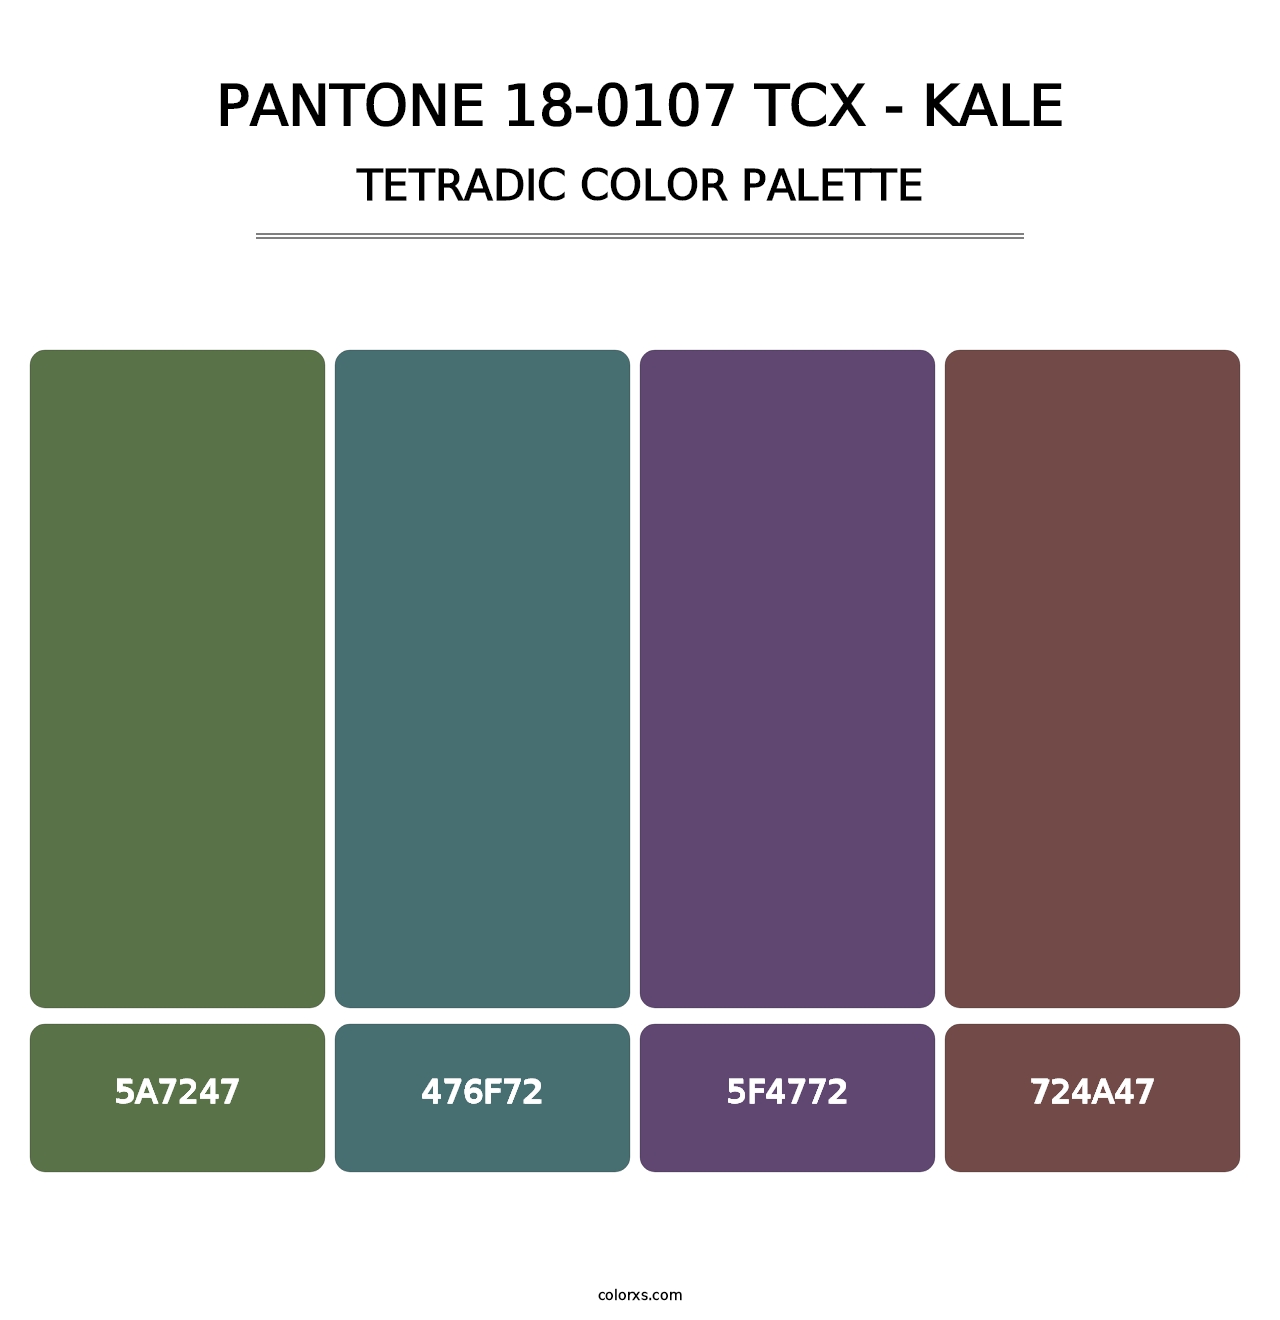 PANTONE 18-0107 TCX - Kale - Tetradic Color Palette